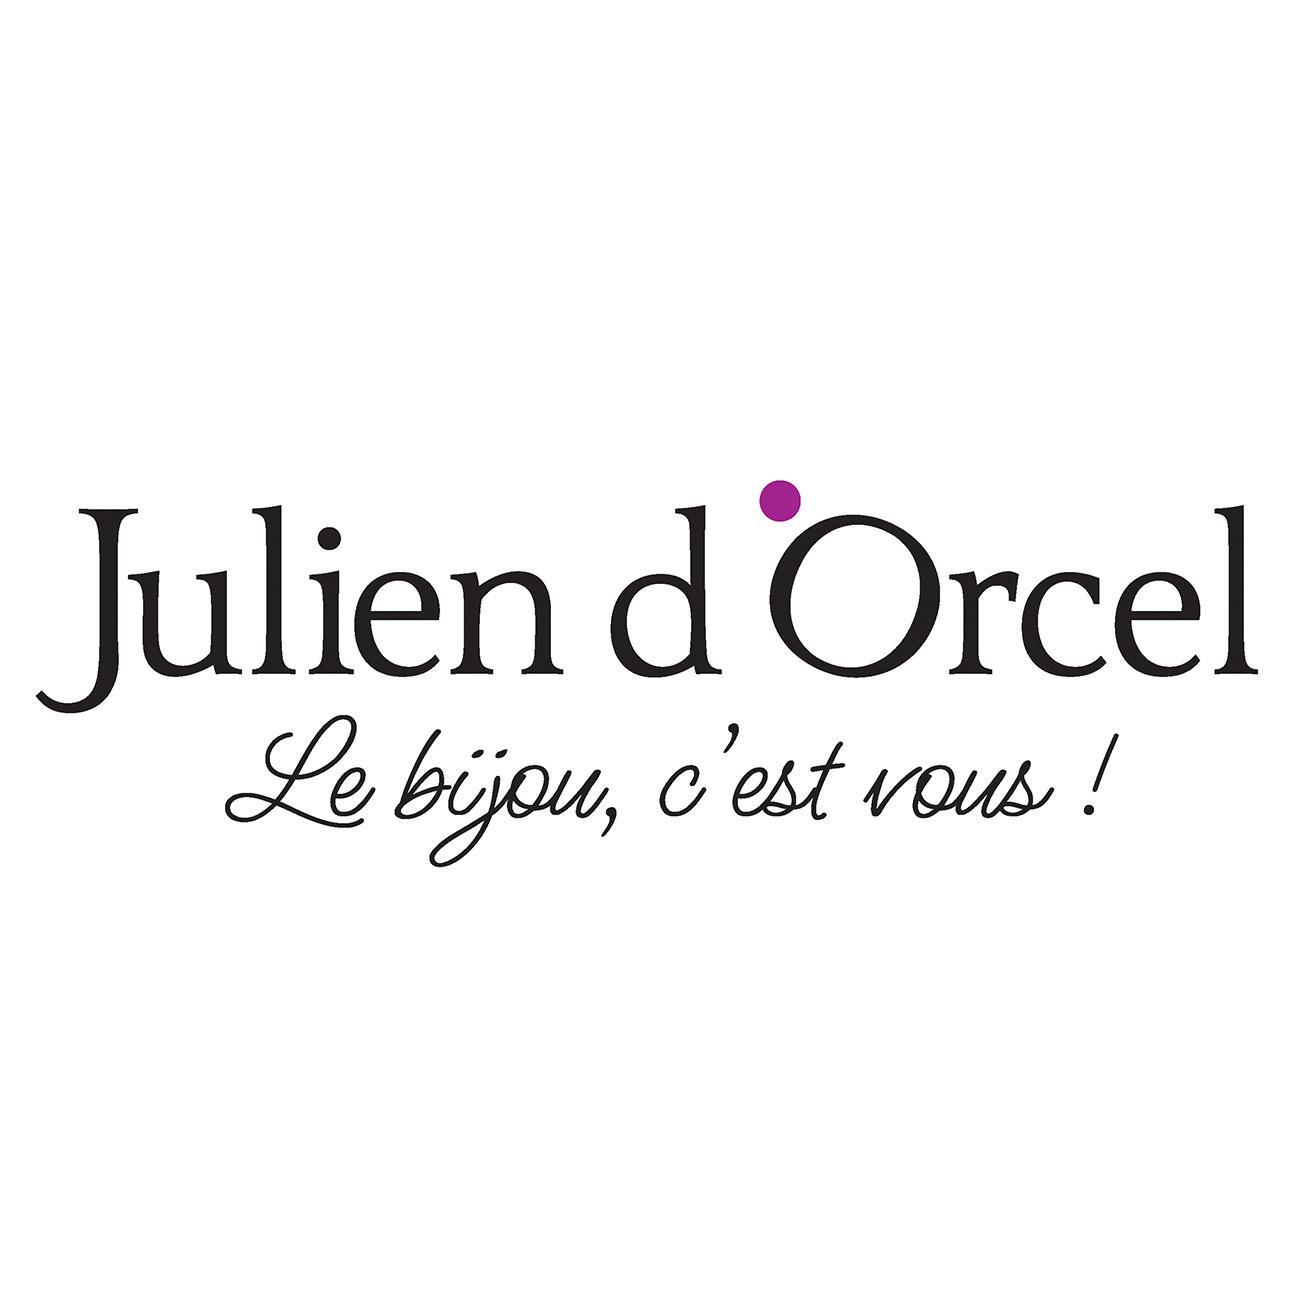 Julien D'orcel Evreux